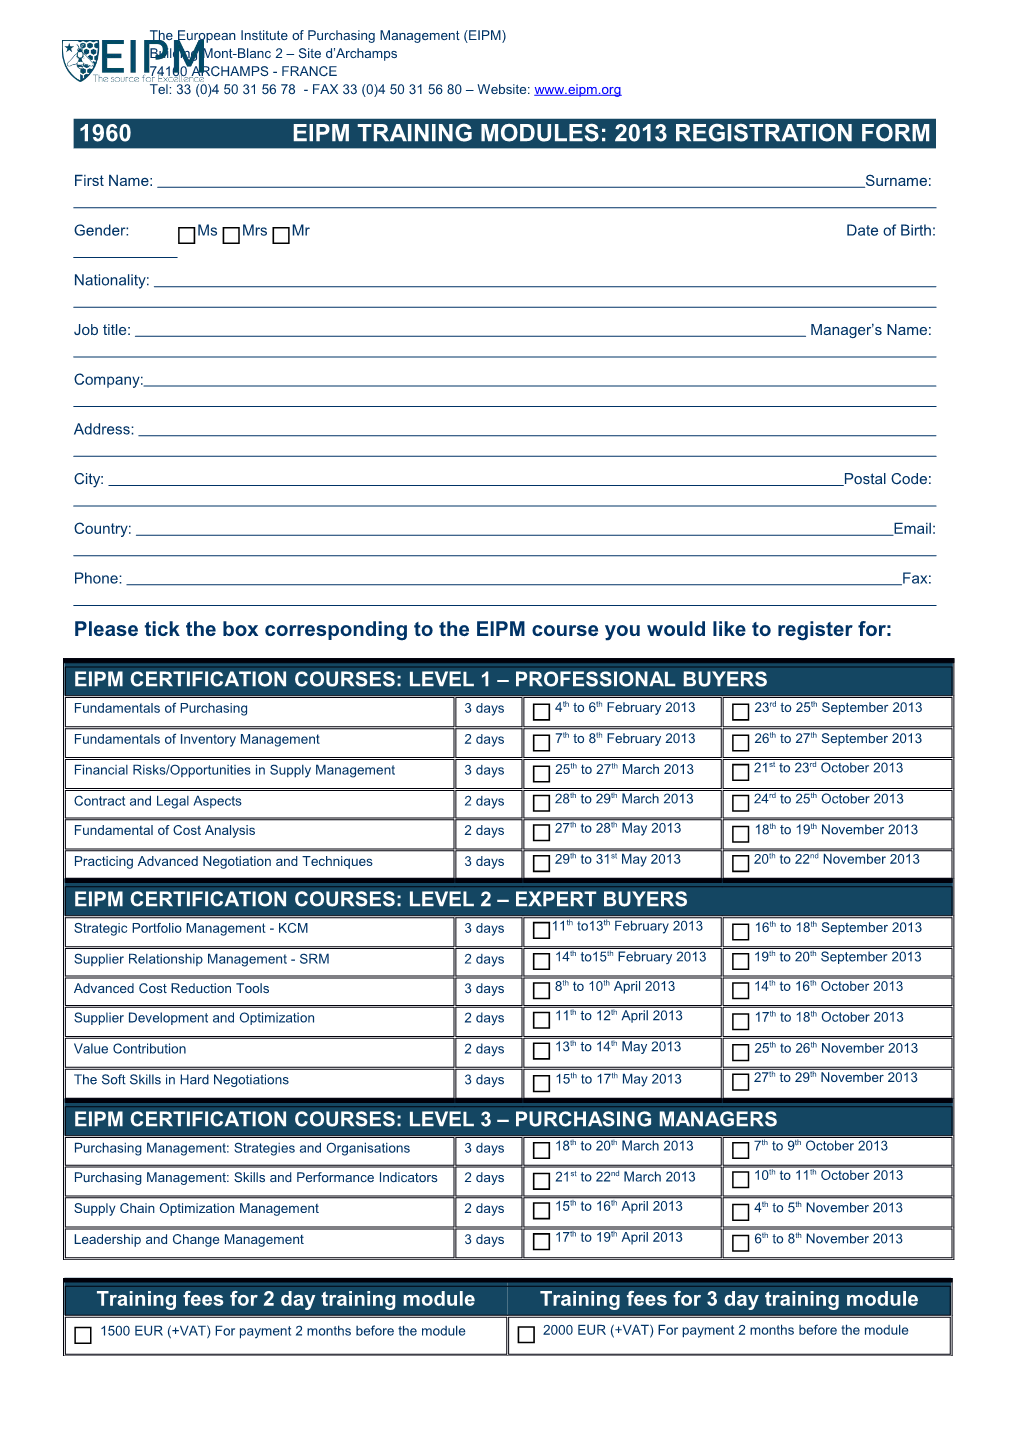 Eipm Training Modules: 2013 Registration Form